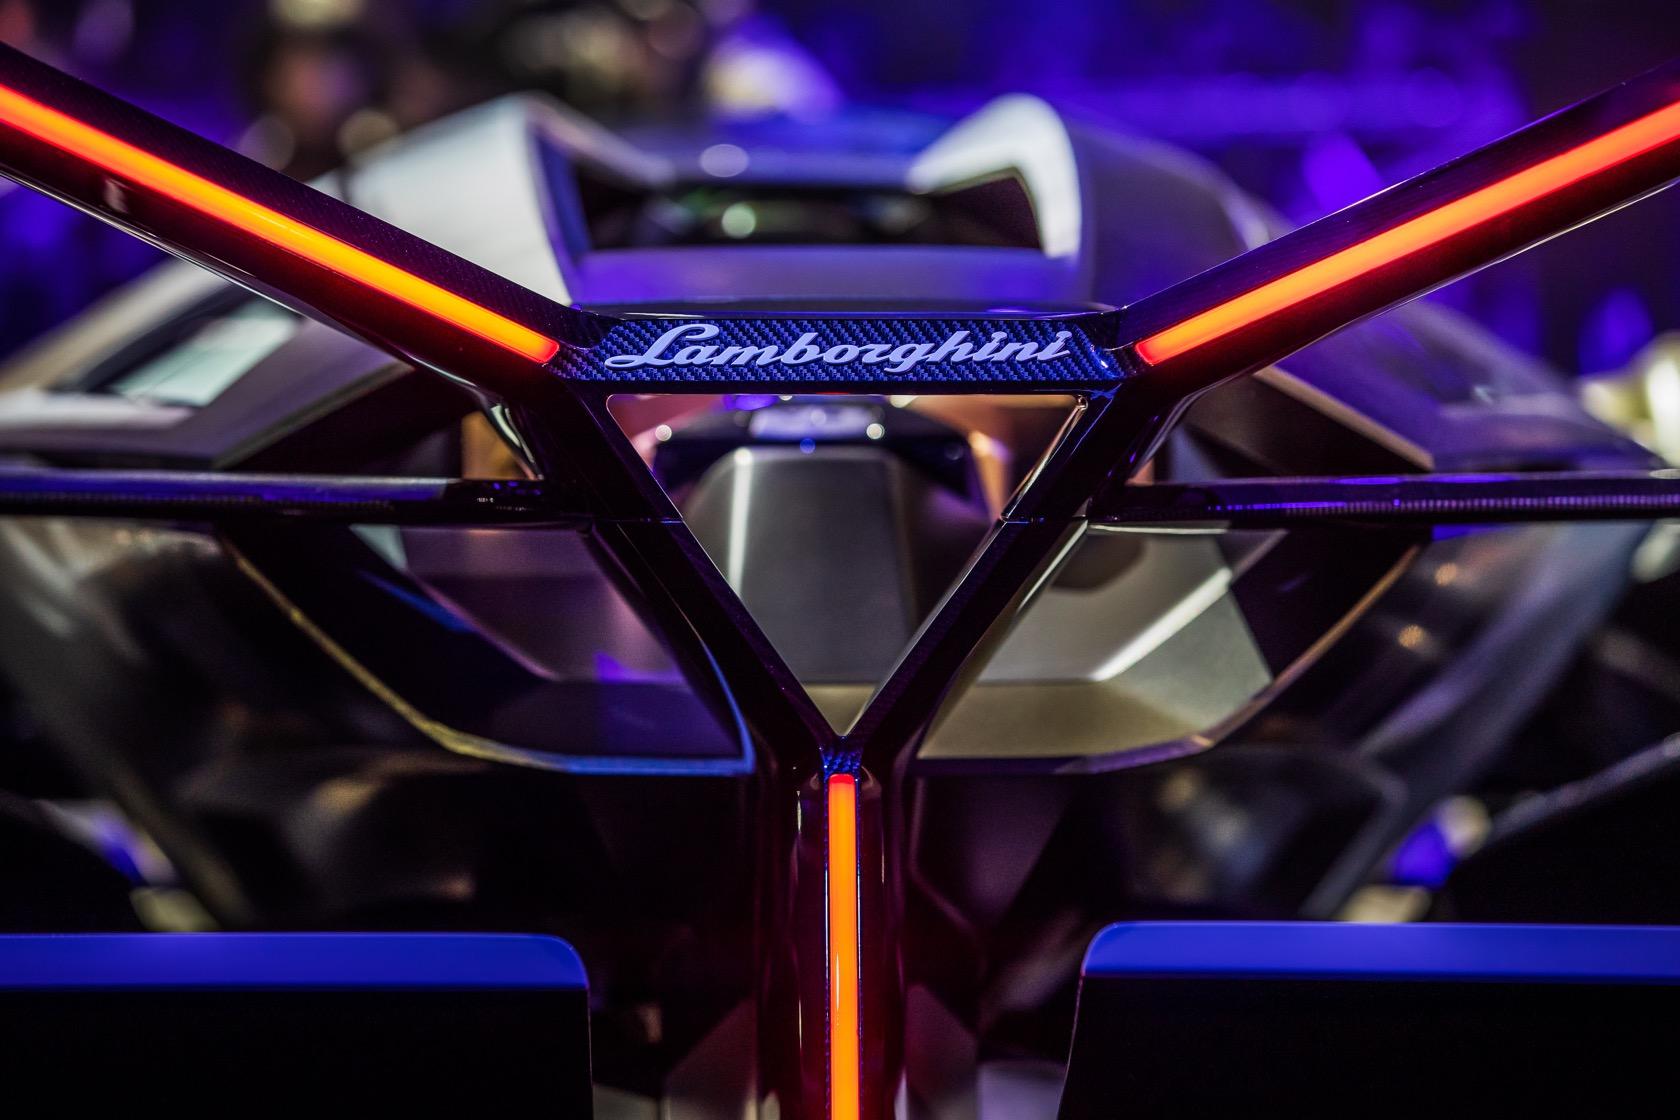 The Lamborghini Lambo V12 Vision Gran Turismo has just one